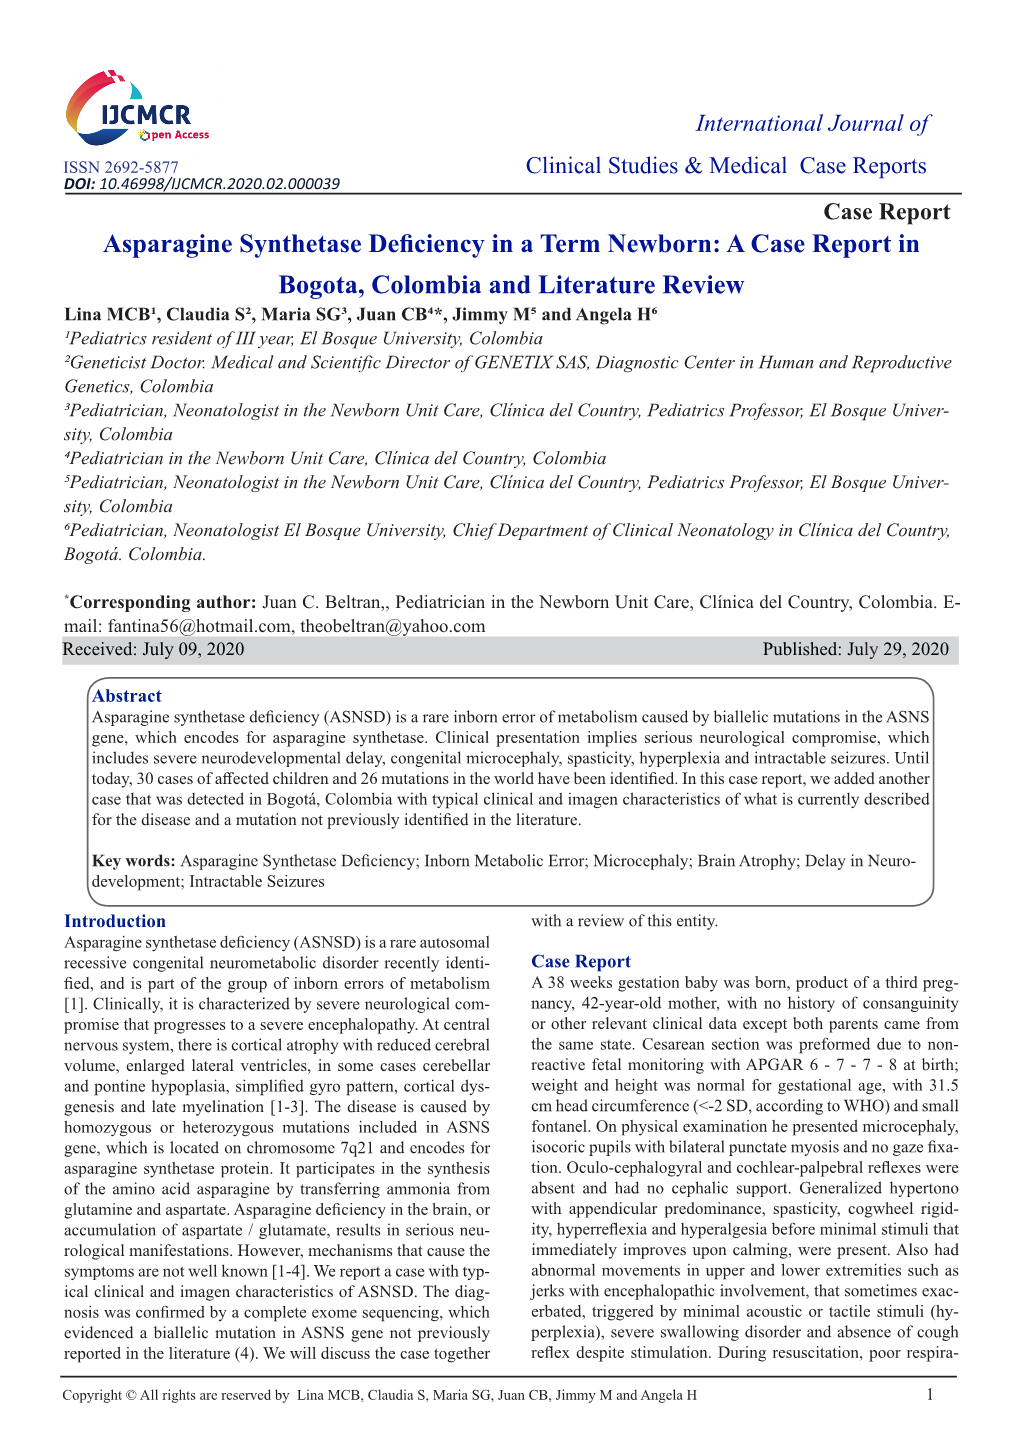 Asparagine Synthetase Deficiency in a Term Newborn